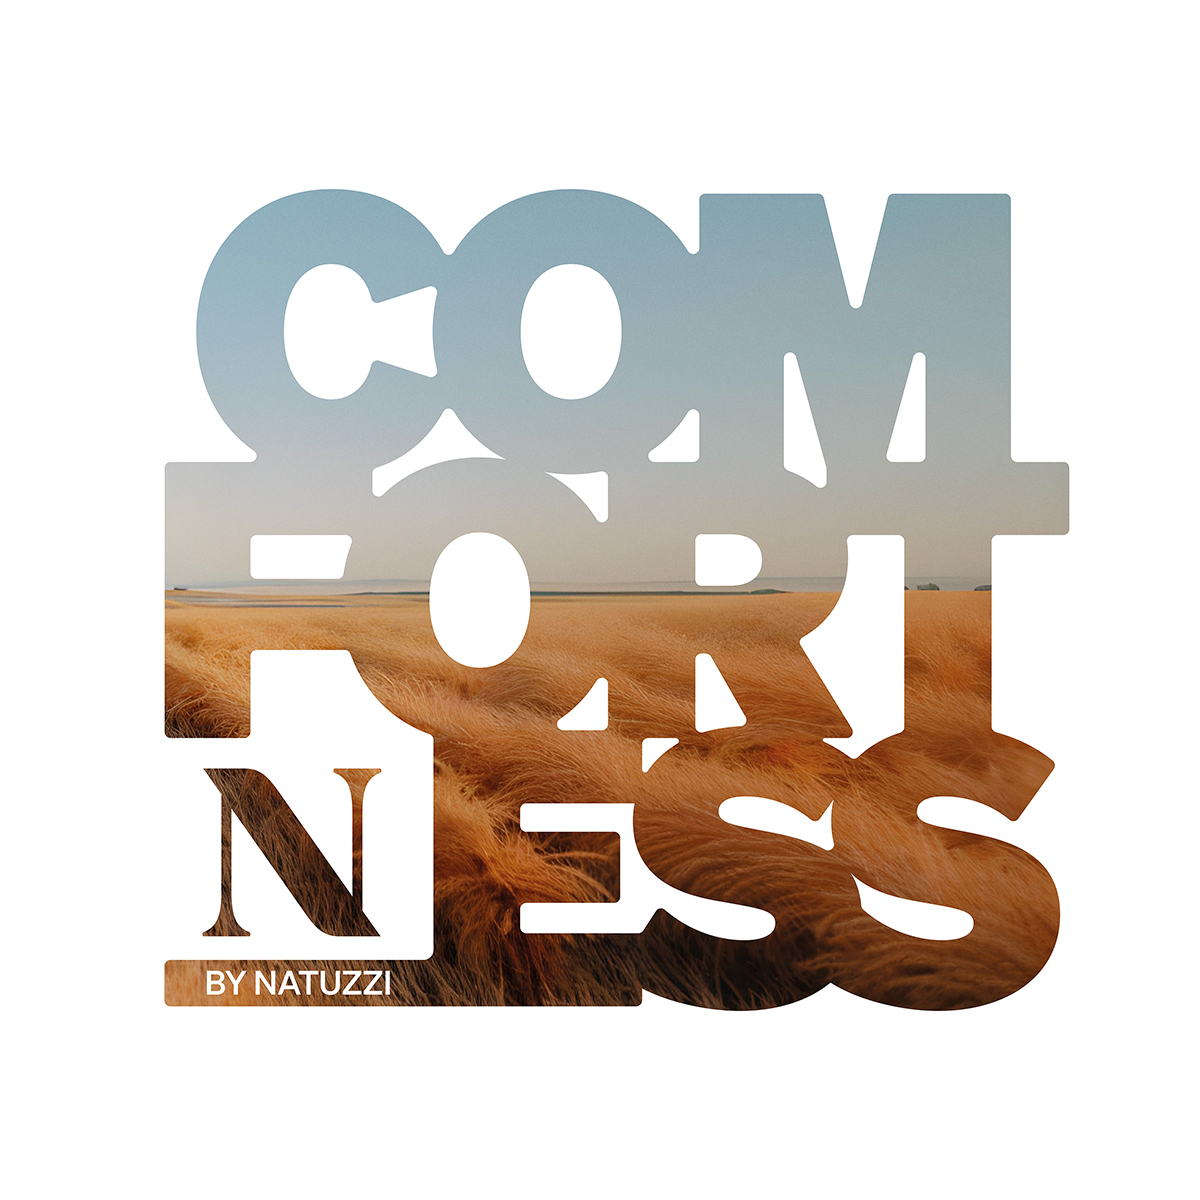 Natuzzi editorial - Comfortness Vision / Manifesto